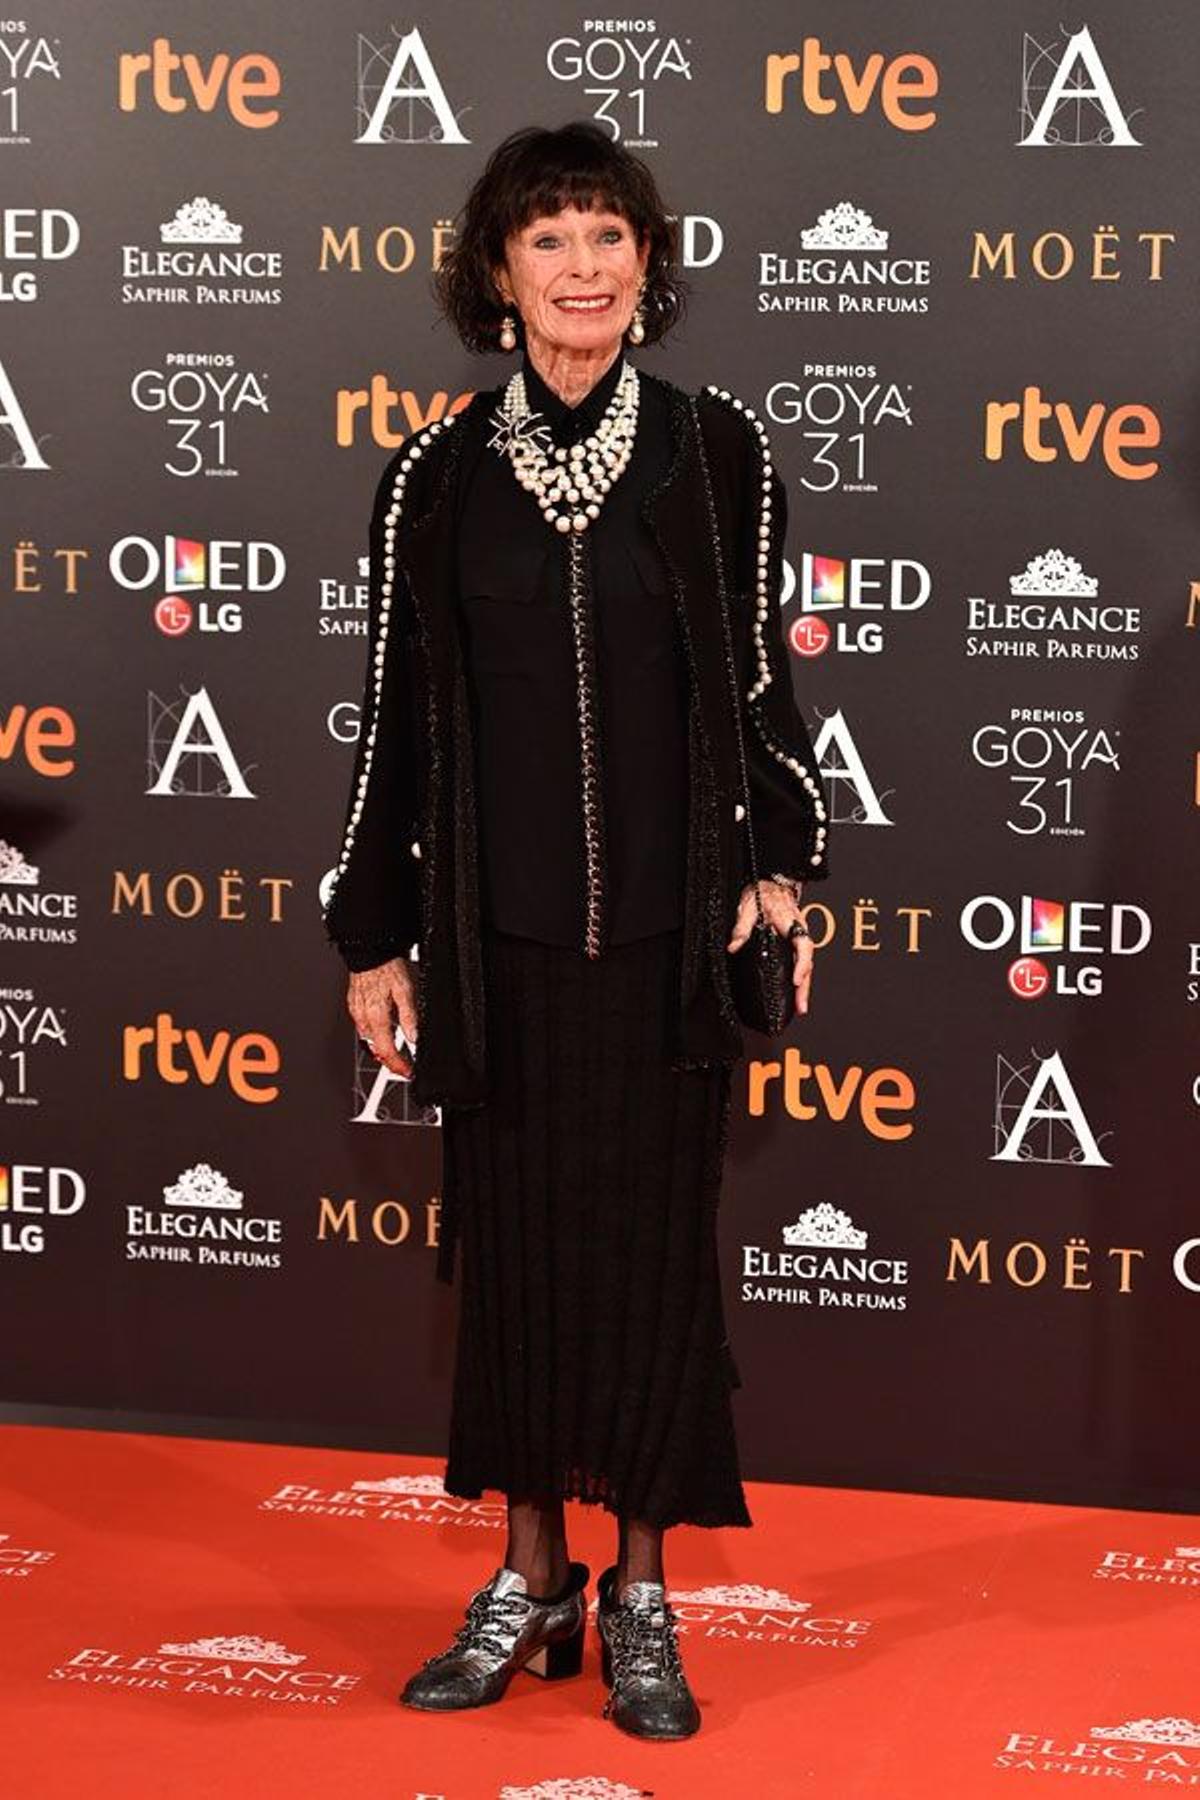 Premios Goya 2017: Geraldine Chaplin